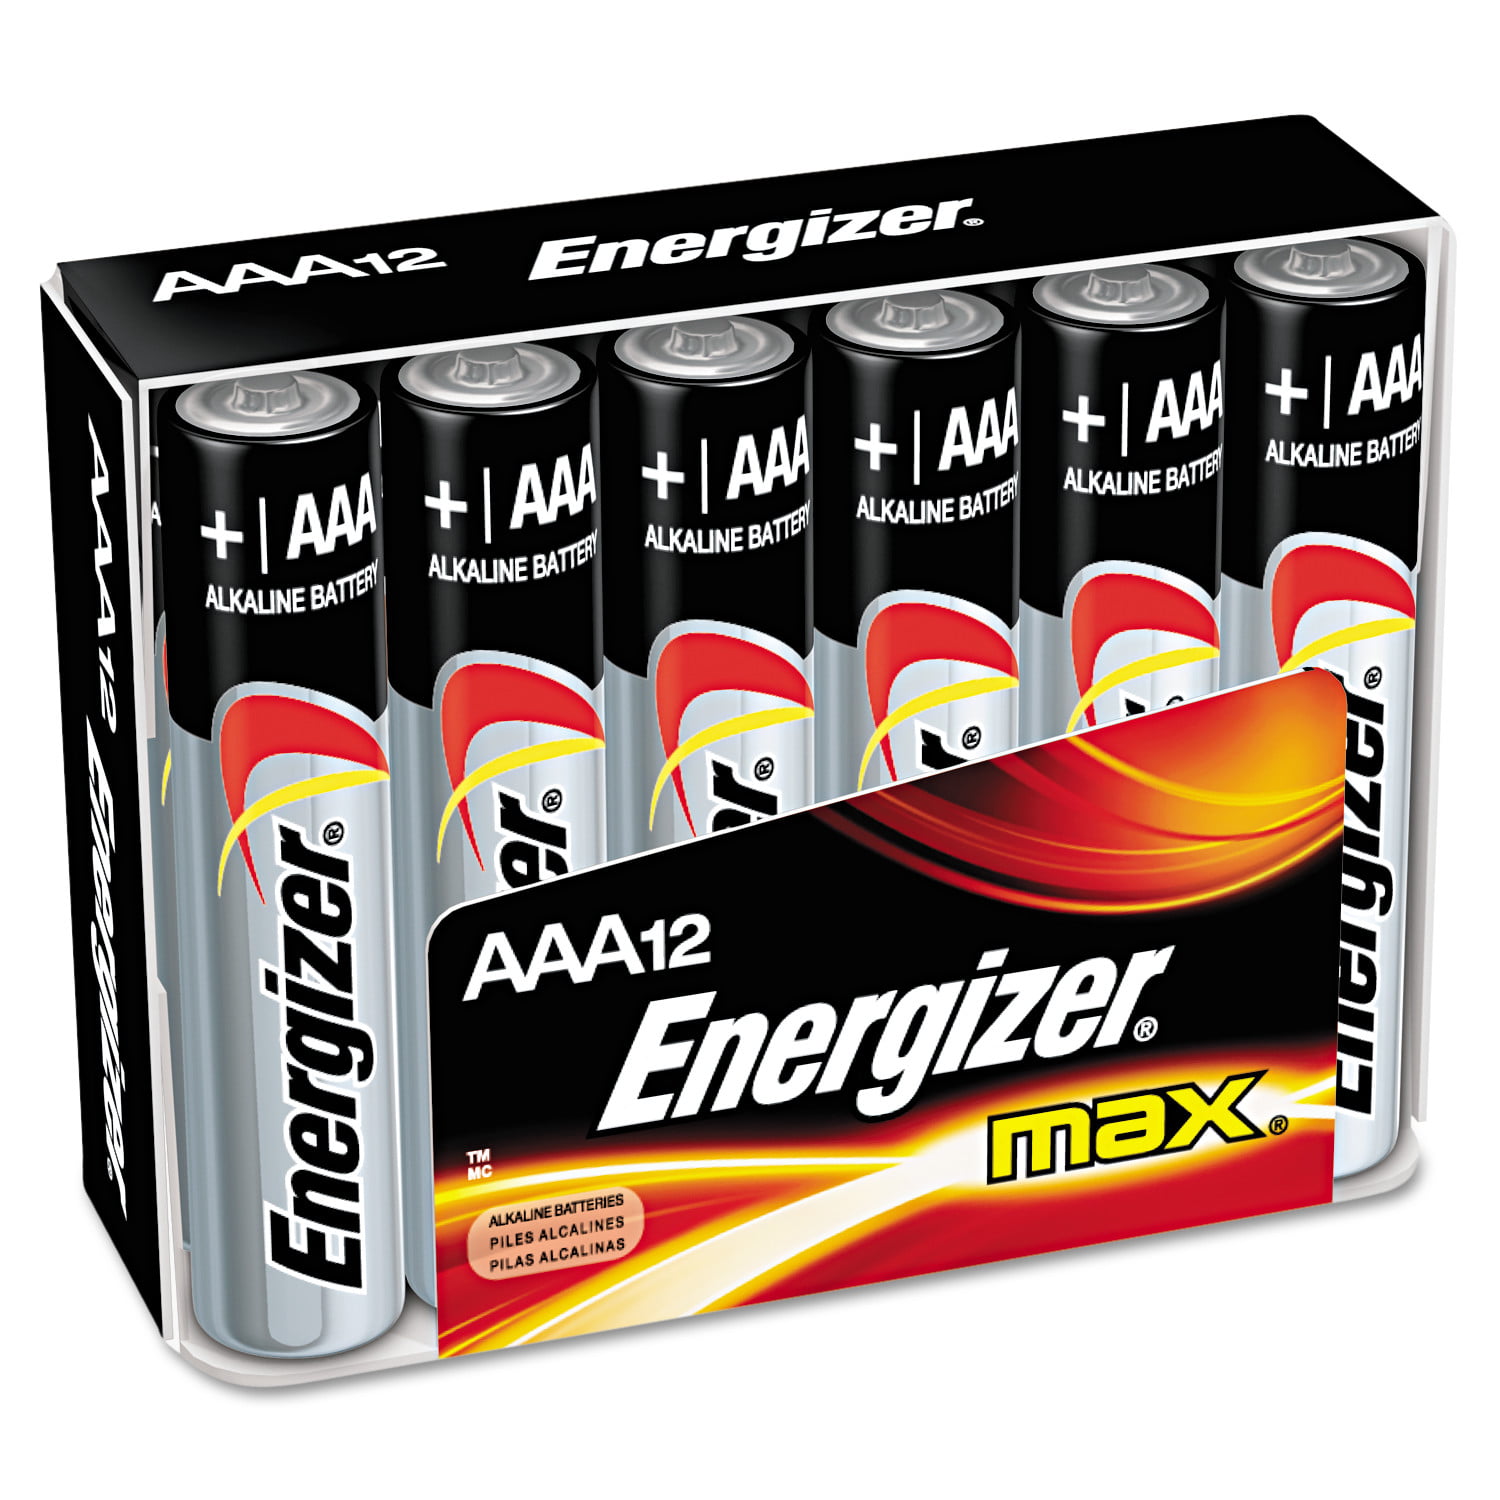 energizer-max-alkaline-batteries-aaa-12-batteries-pack-walmart